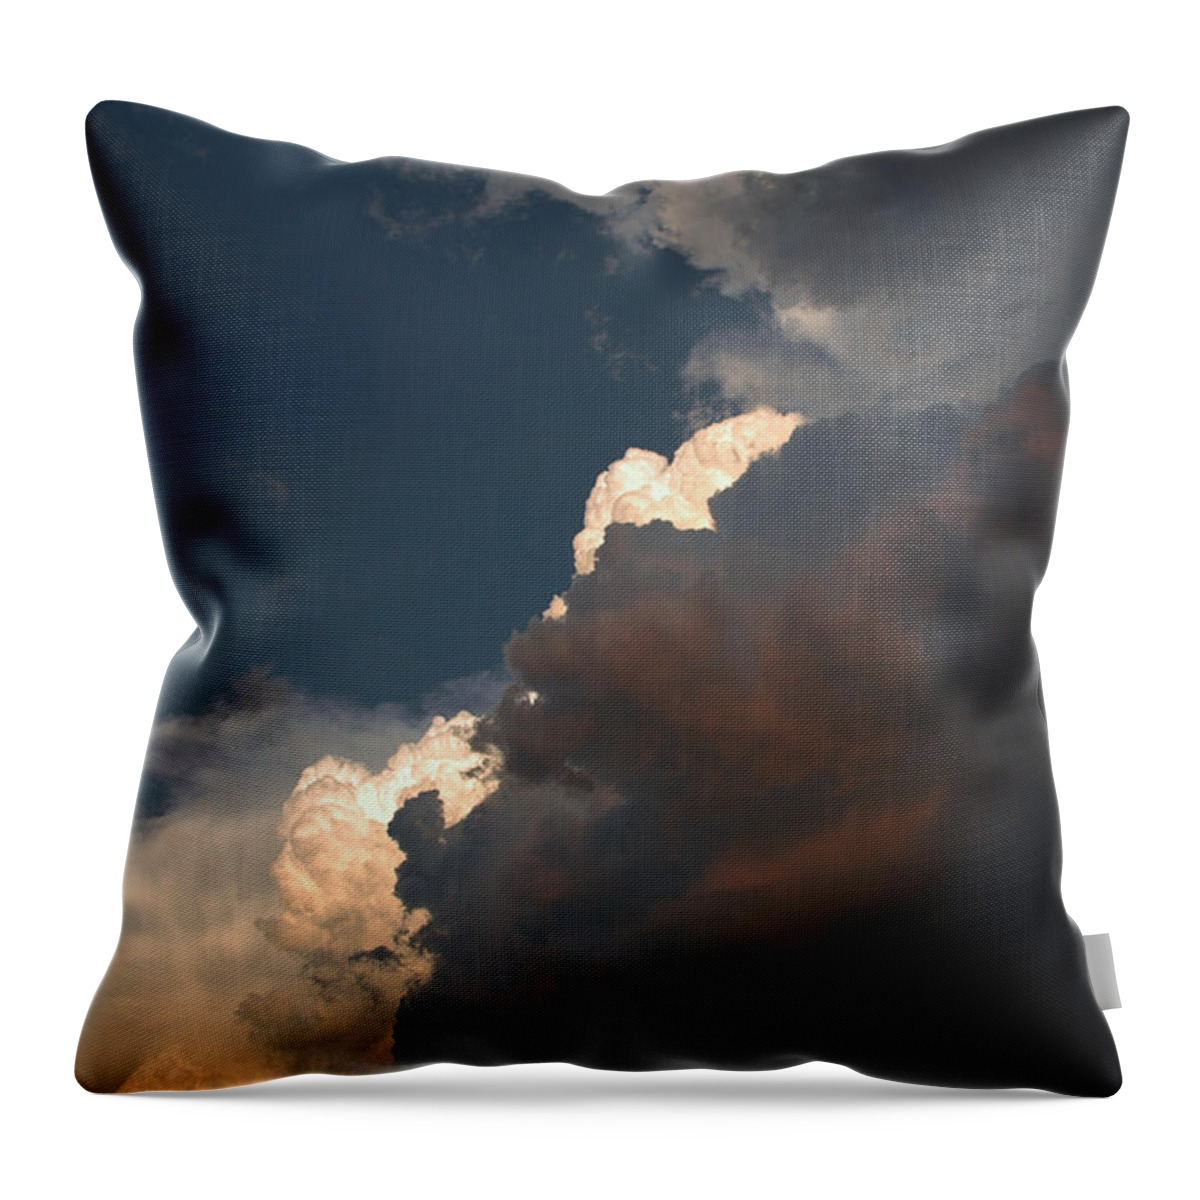 Usa Throw Pillow featuring the photograph Big Clouds by LeeAnn McLaneGoetz McLaneGoetzStudioLLCcom